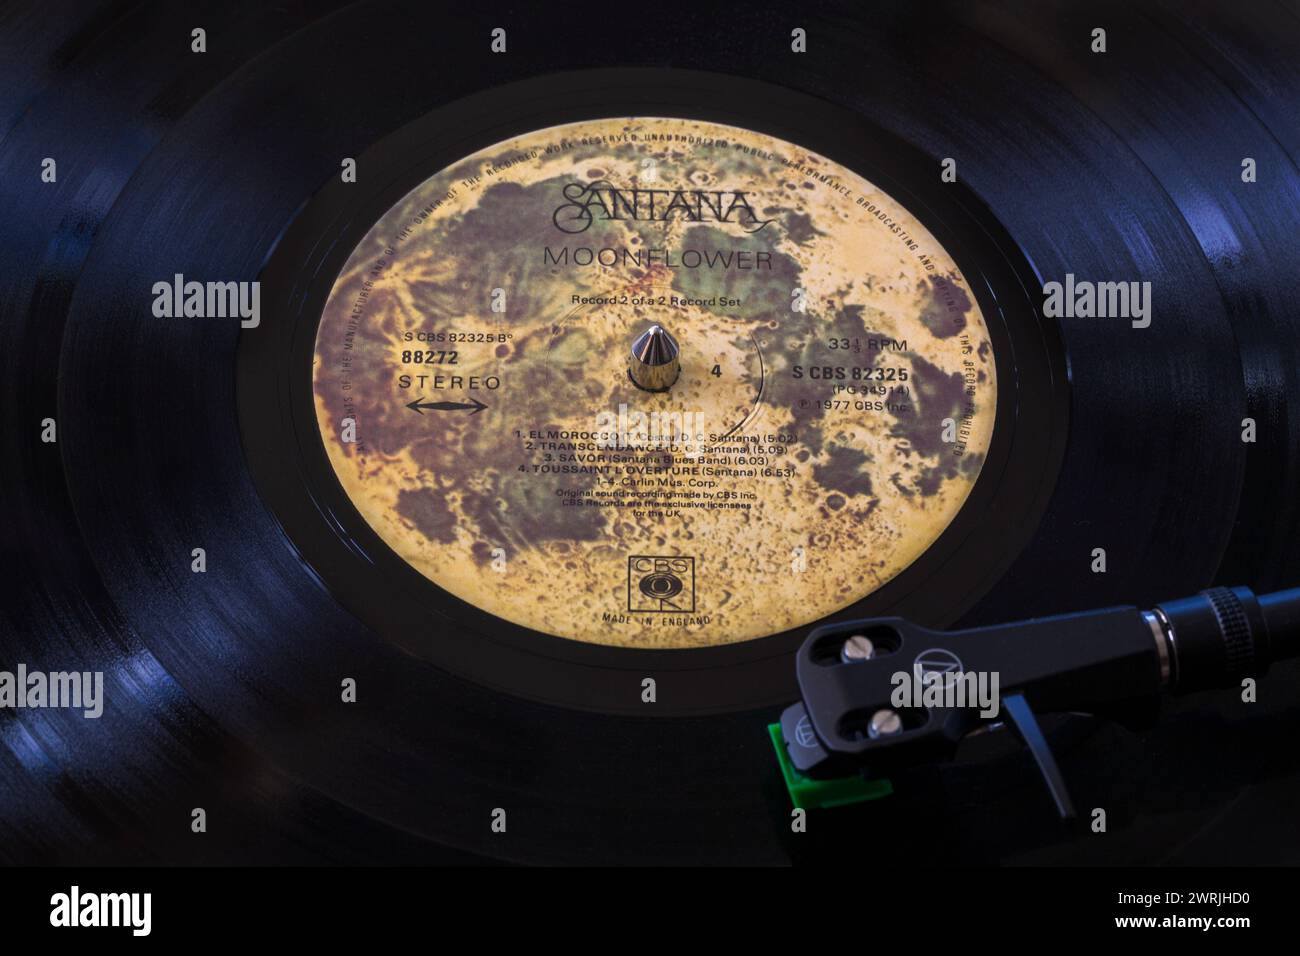 Santana Moonflower vinyl record album LP with tonearm, cartridge, headshell and stylus on turntable record player  - 1977 Stock Photo